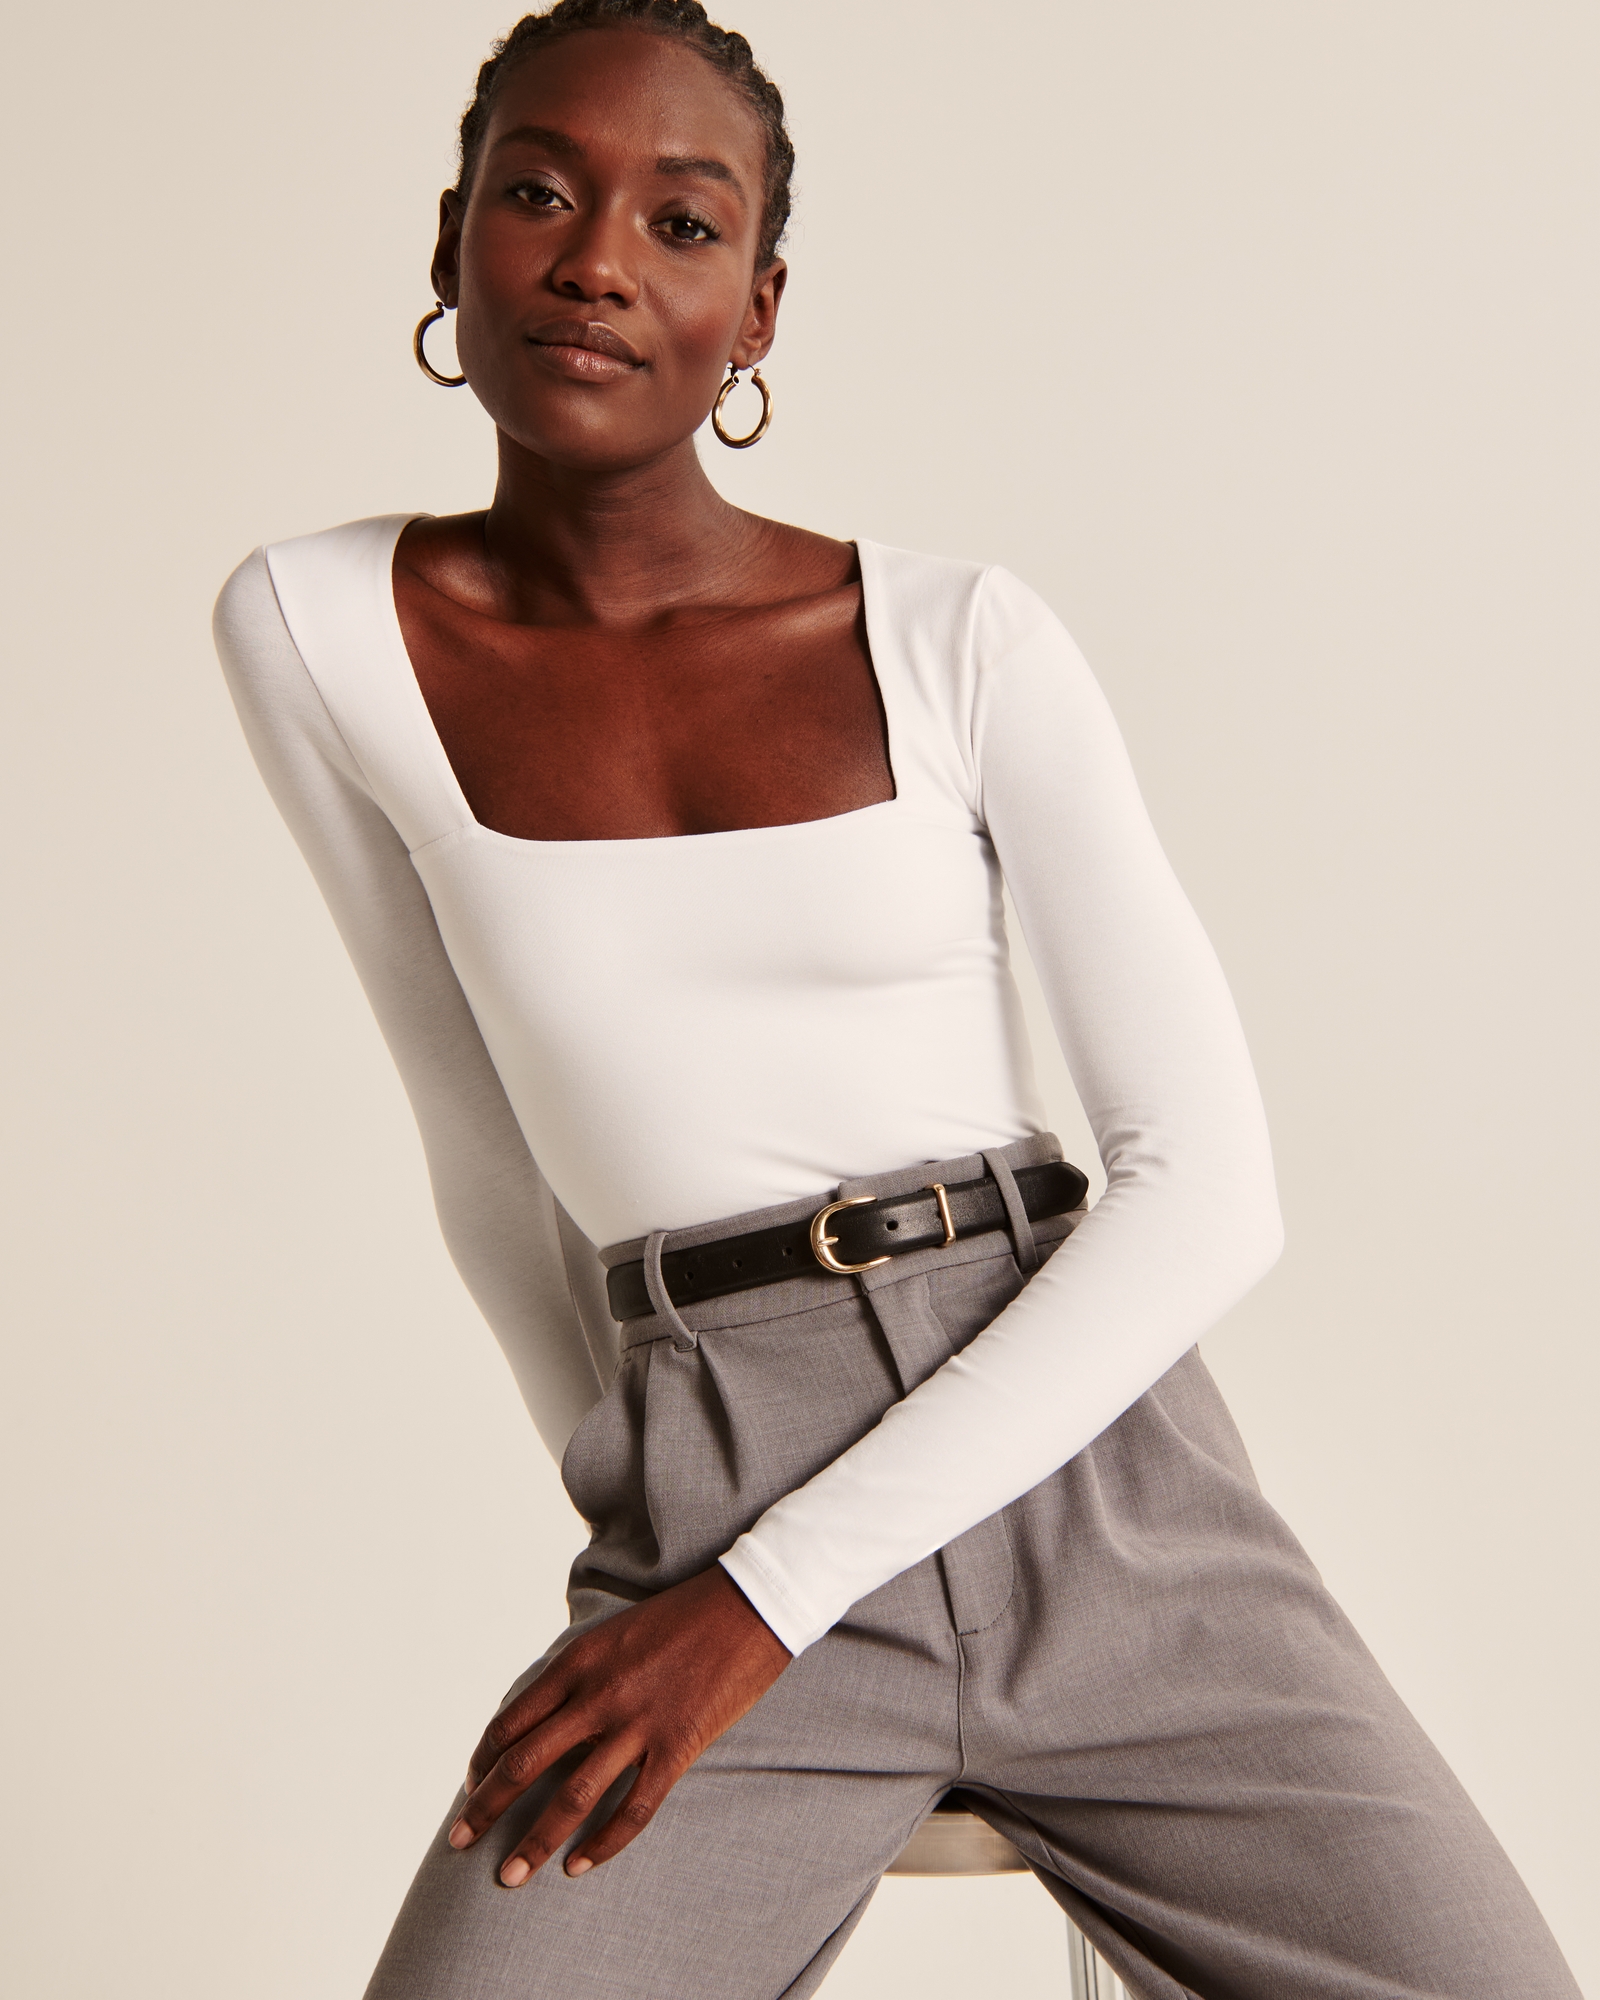 Women's Long-Sleeve Cotton Seamless Fabric Squareneck Bodysuit